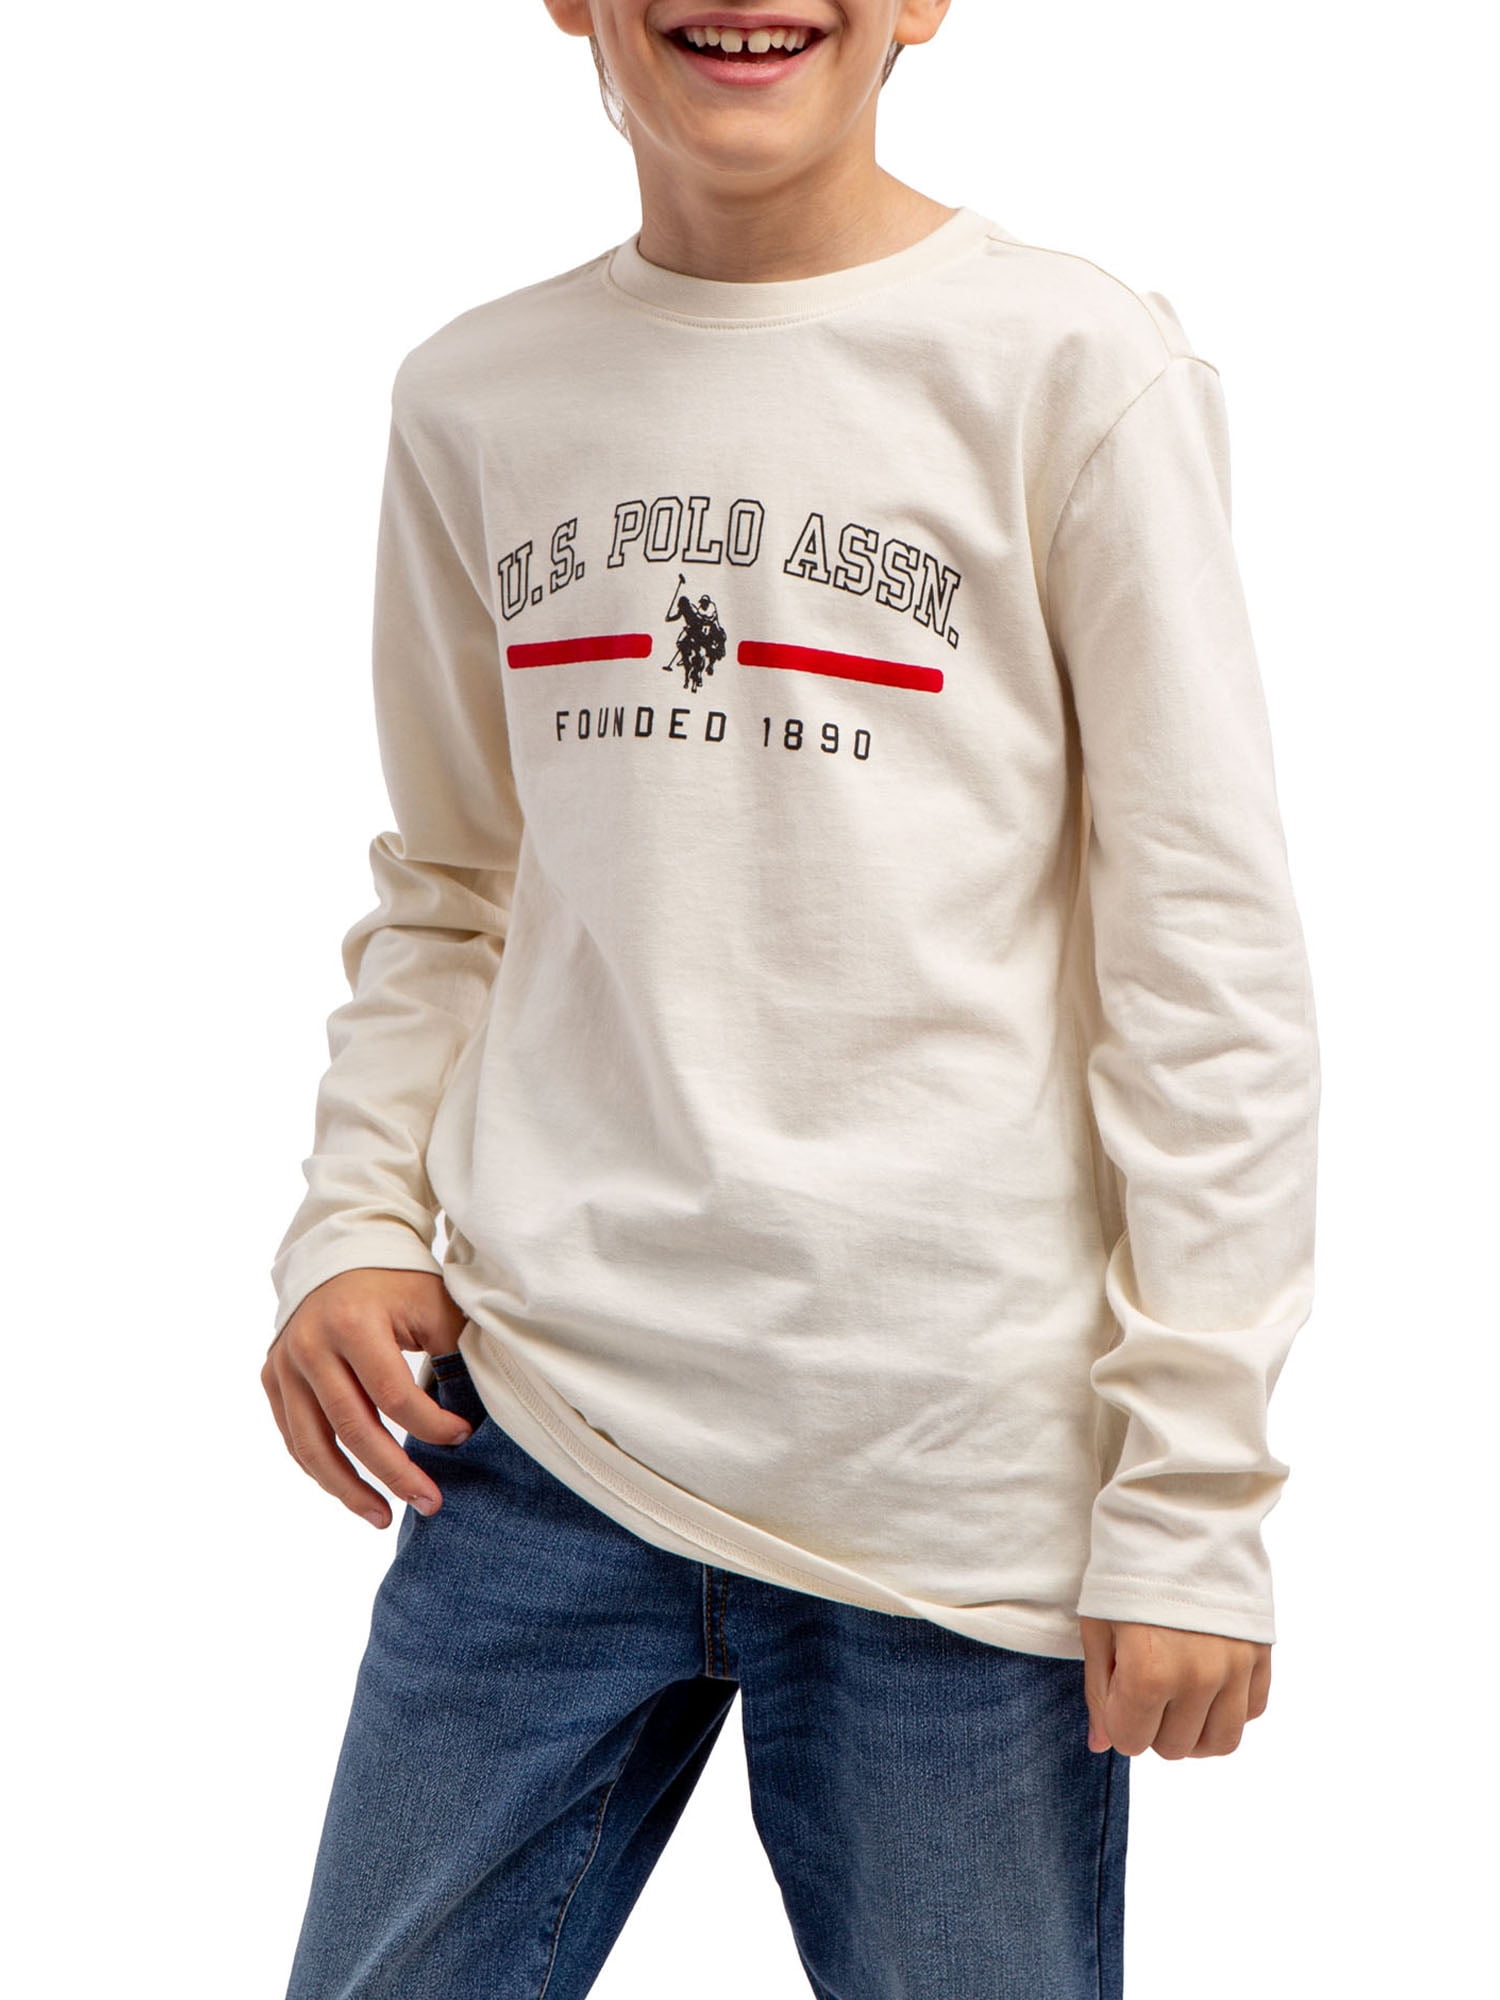 U.S. Polo Assn. Boys Graphic Long Sleeve T-Shirt, Sizes 4-18